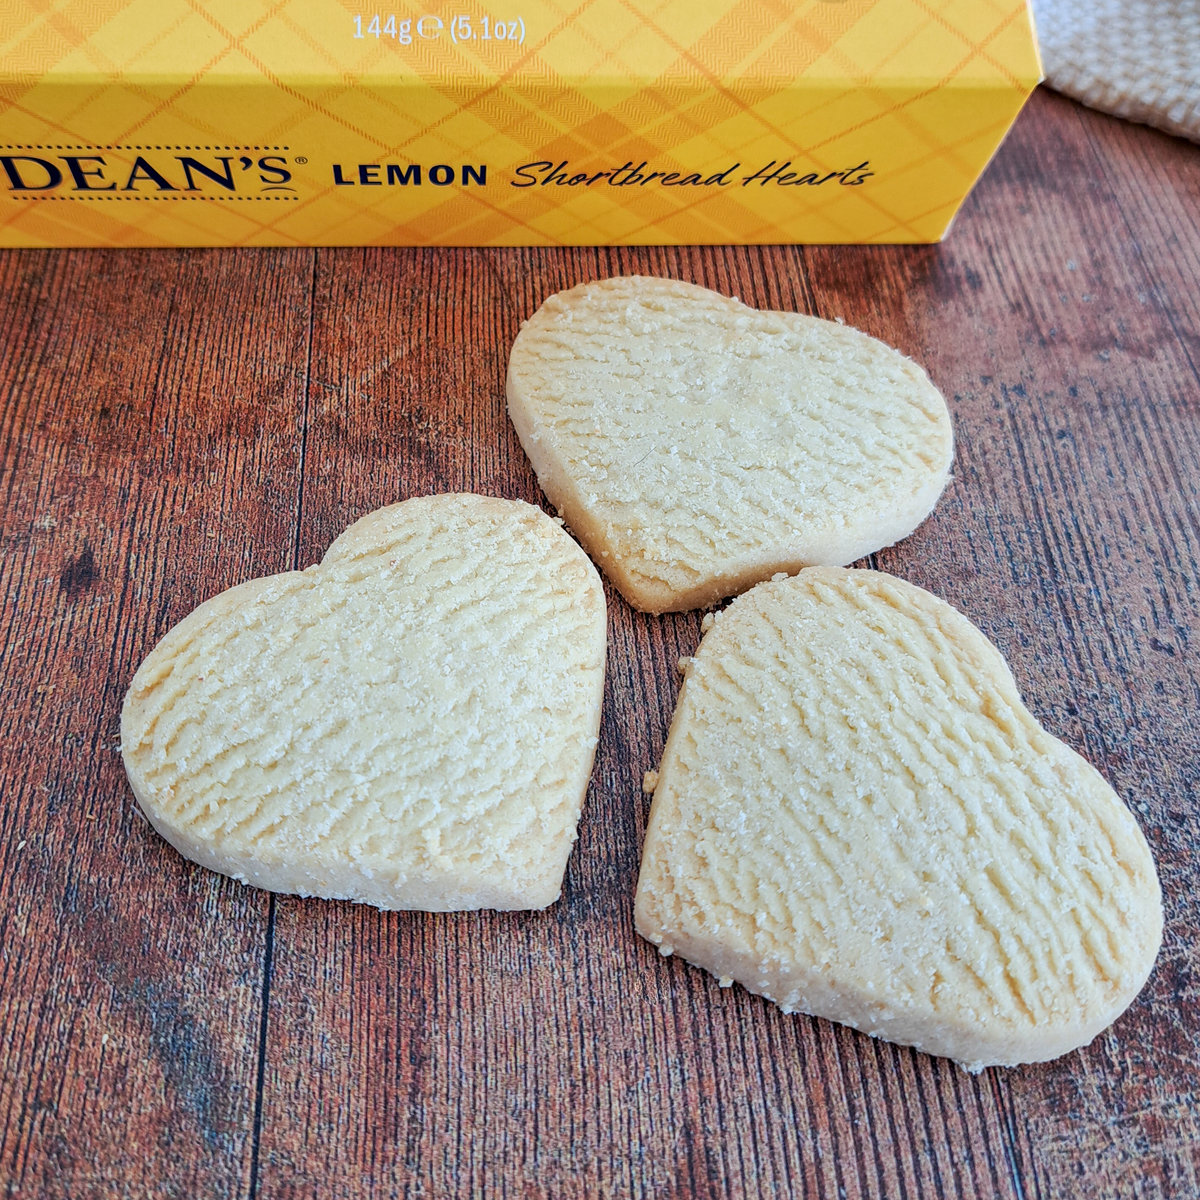 Buy the Lemon Shortbread Hearts 144g online at Dean's of Huntly Ltd